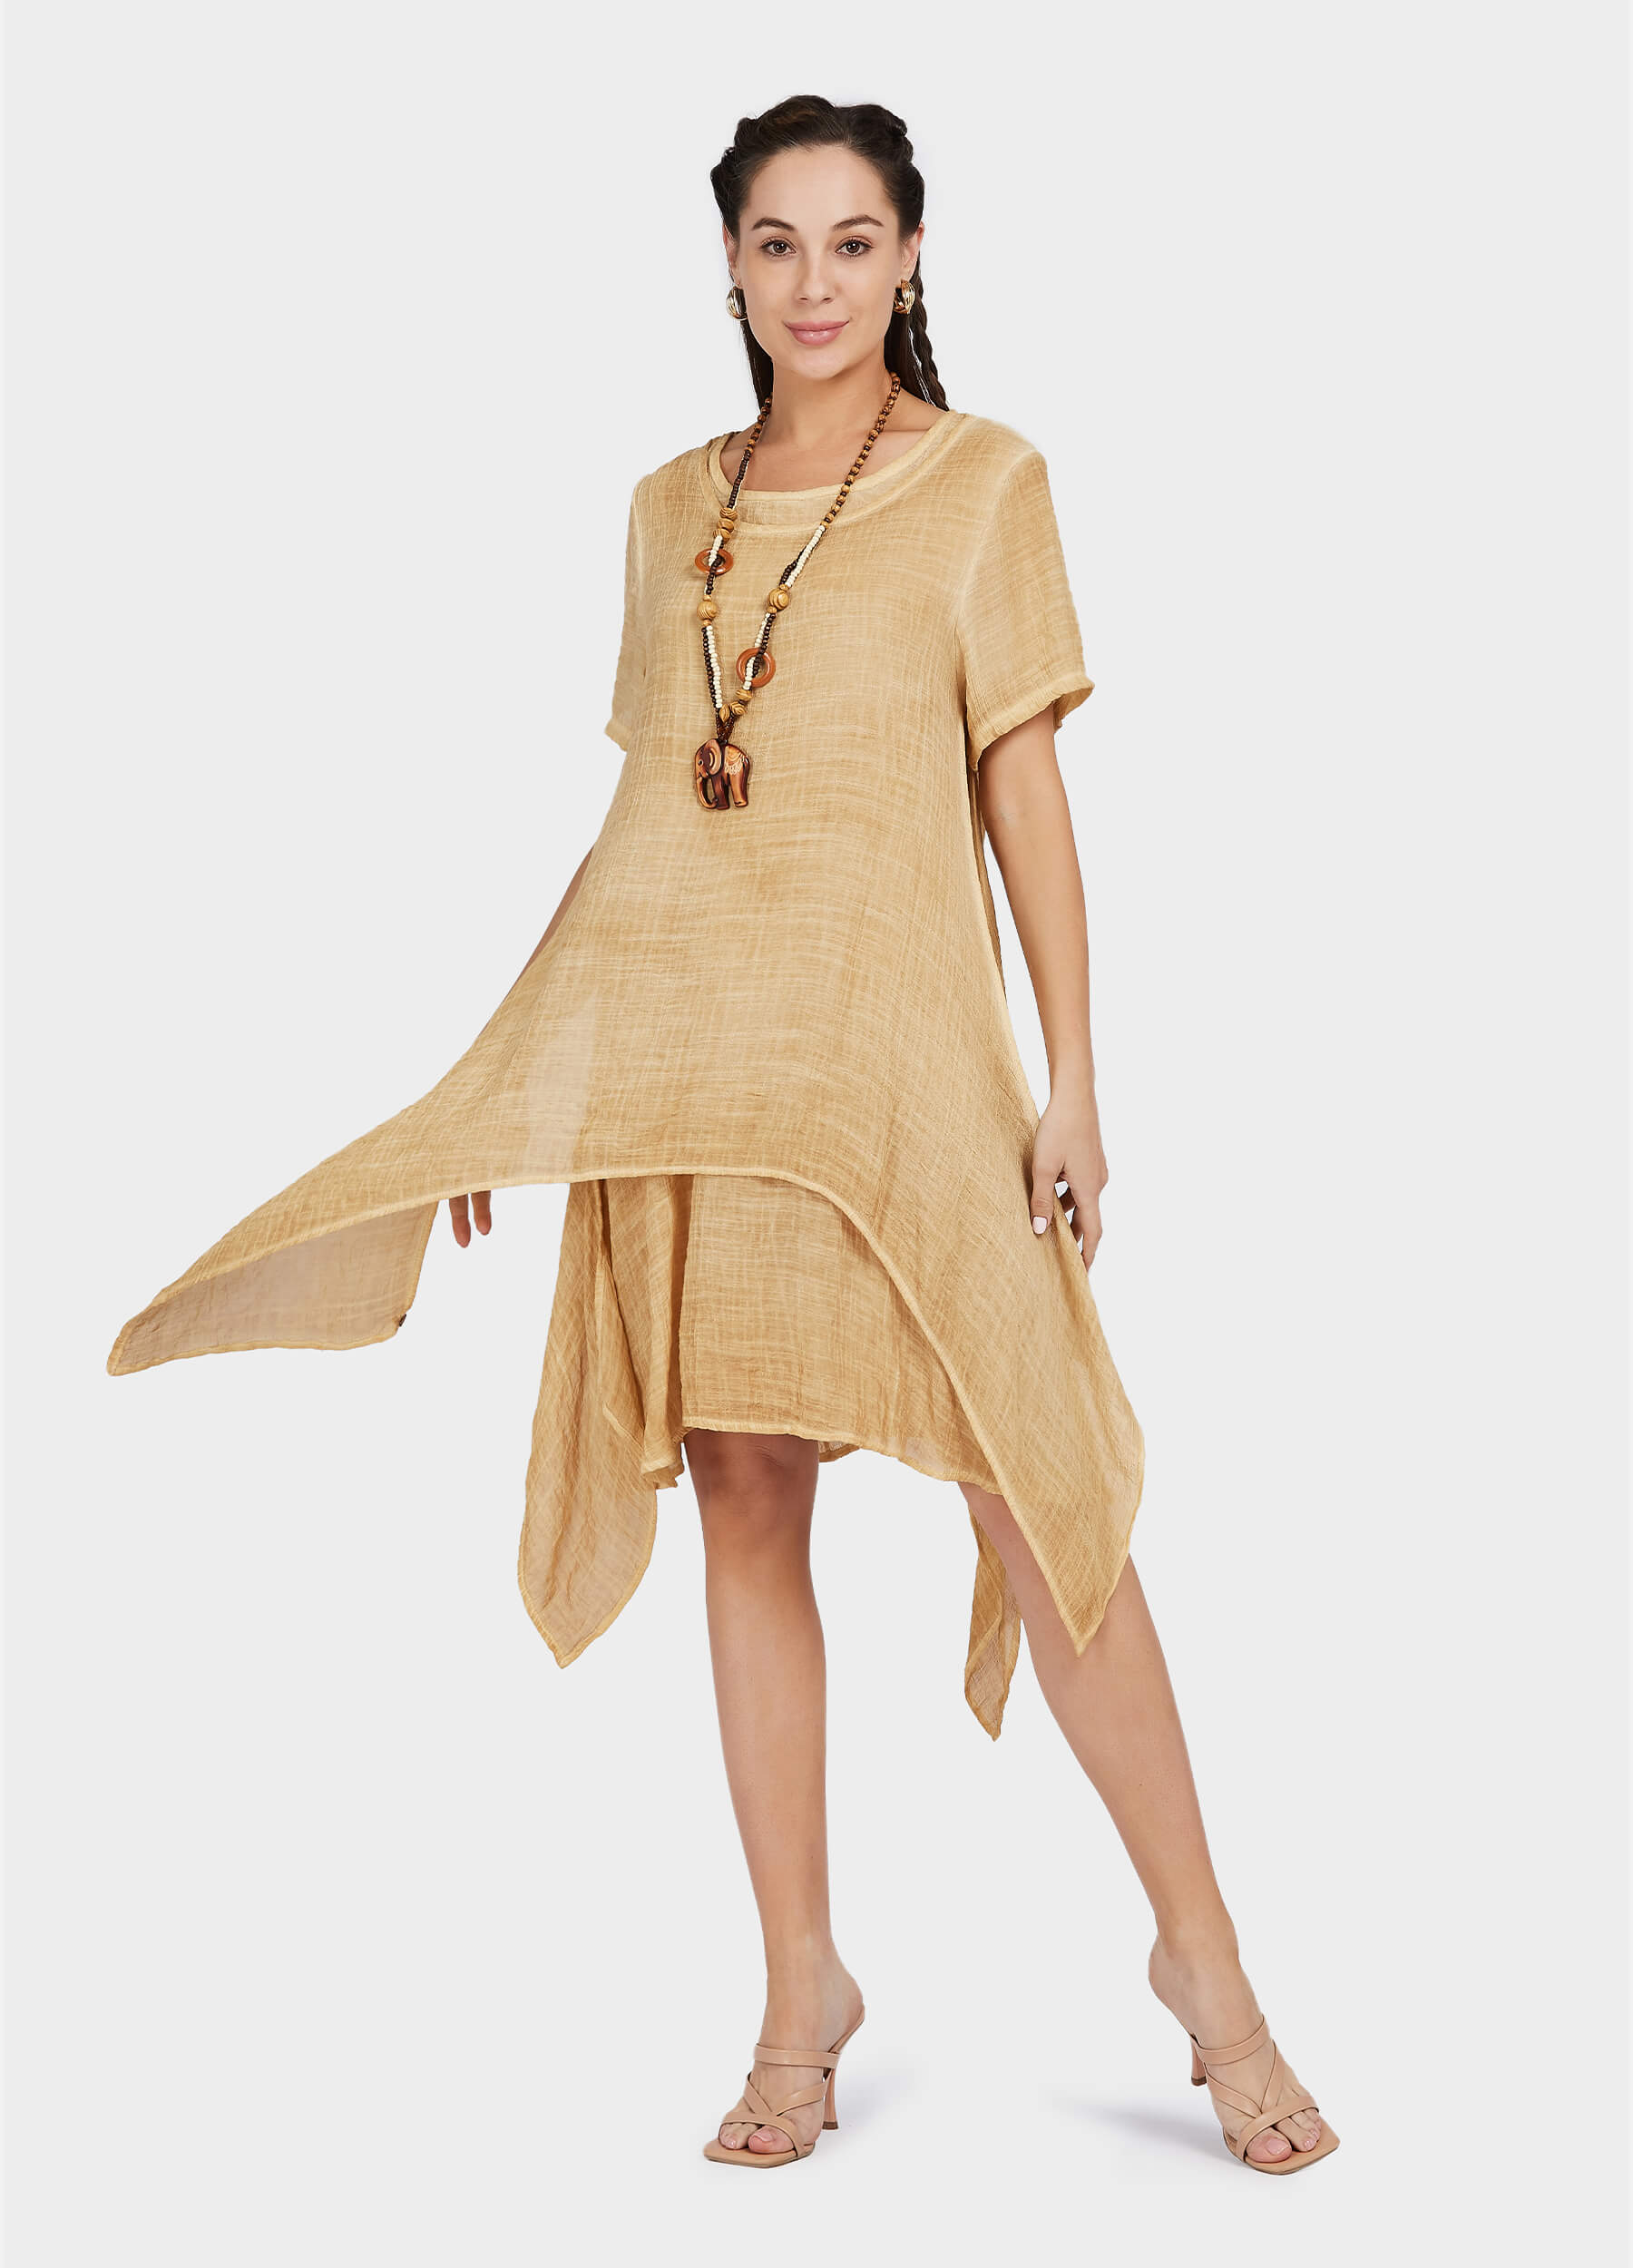 MECALA Women's Linen Scoop Neck Short Sleeve Dress with Wooden Elephant Necklace-Yellow main view